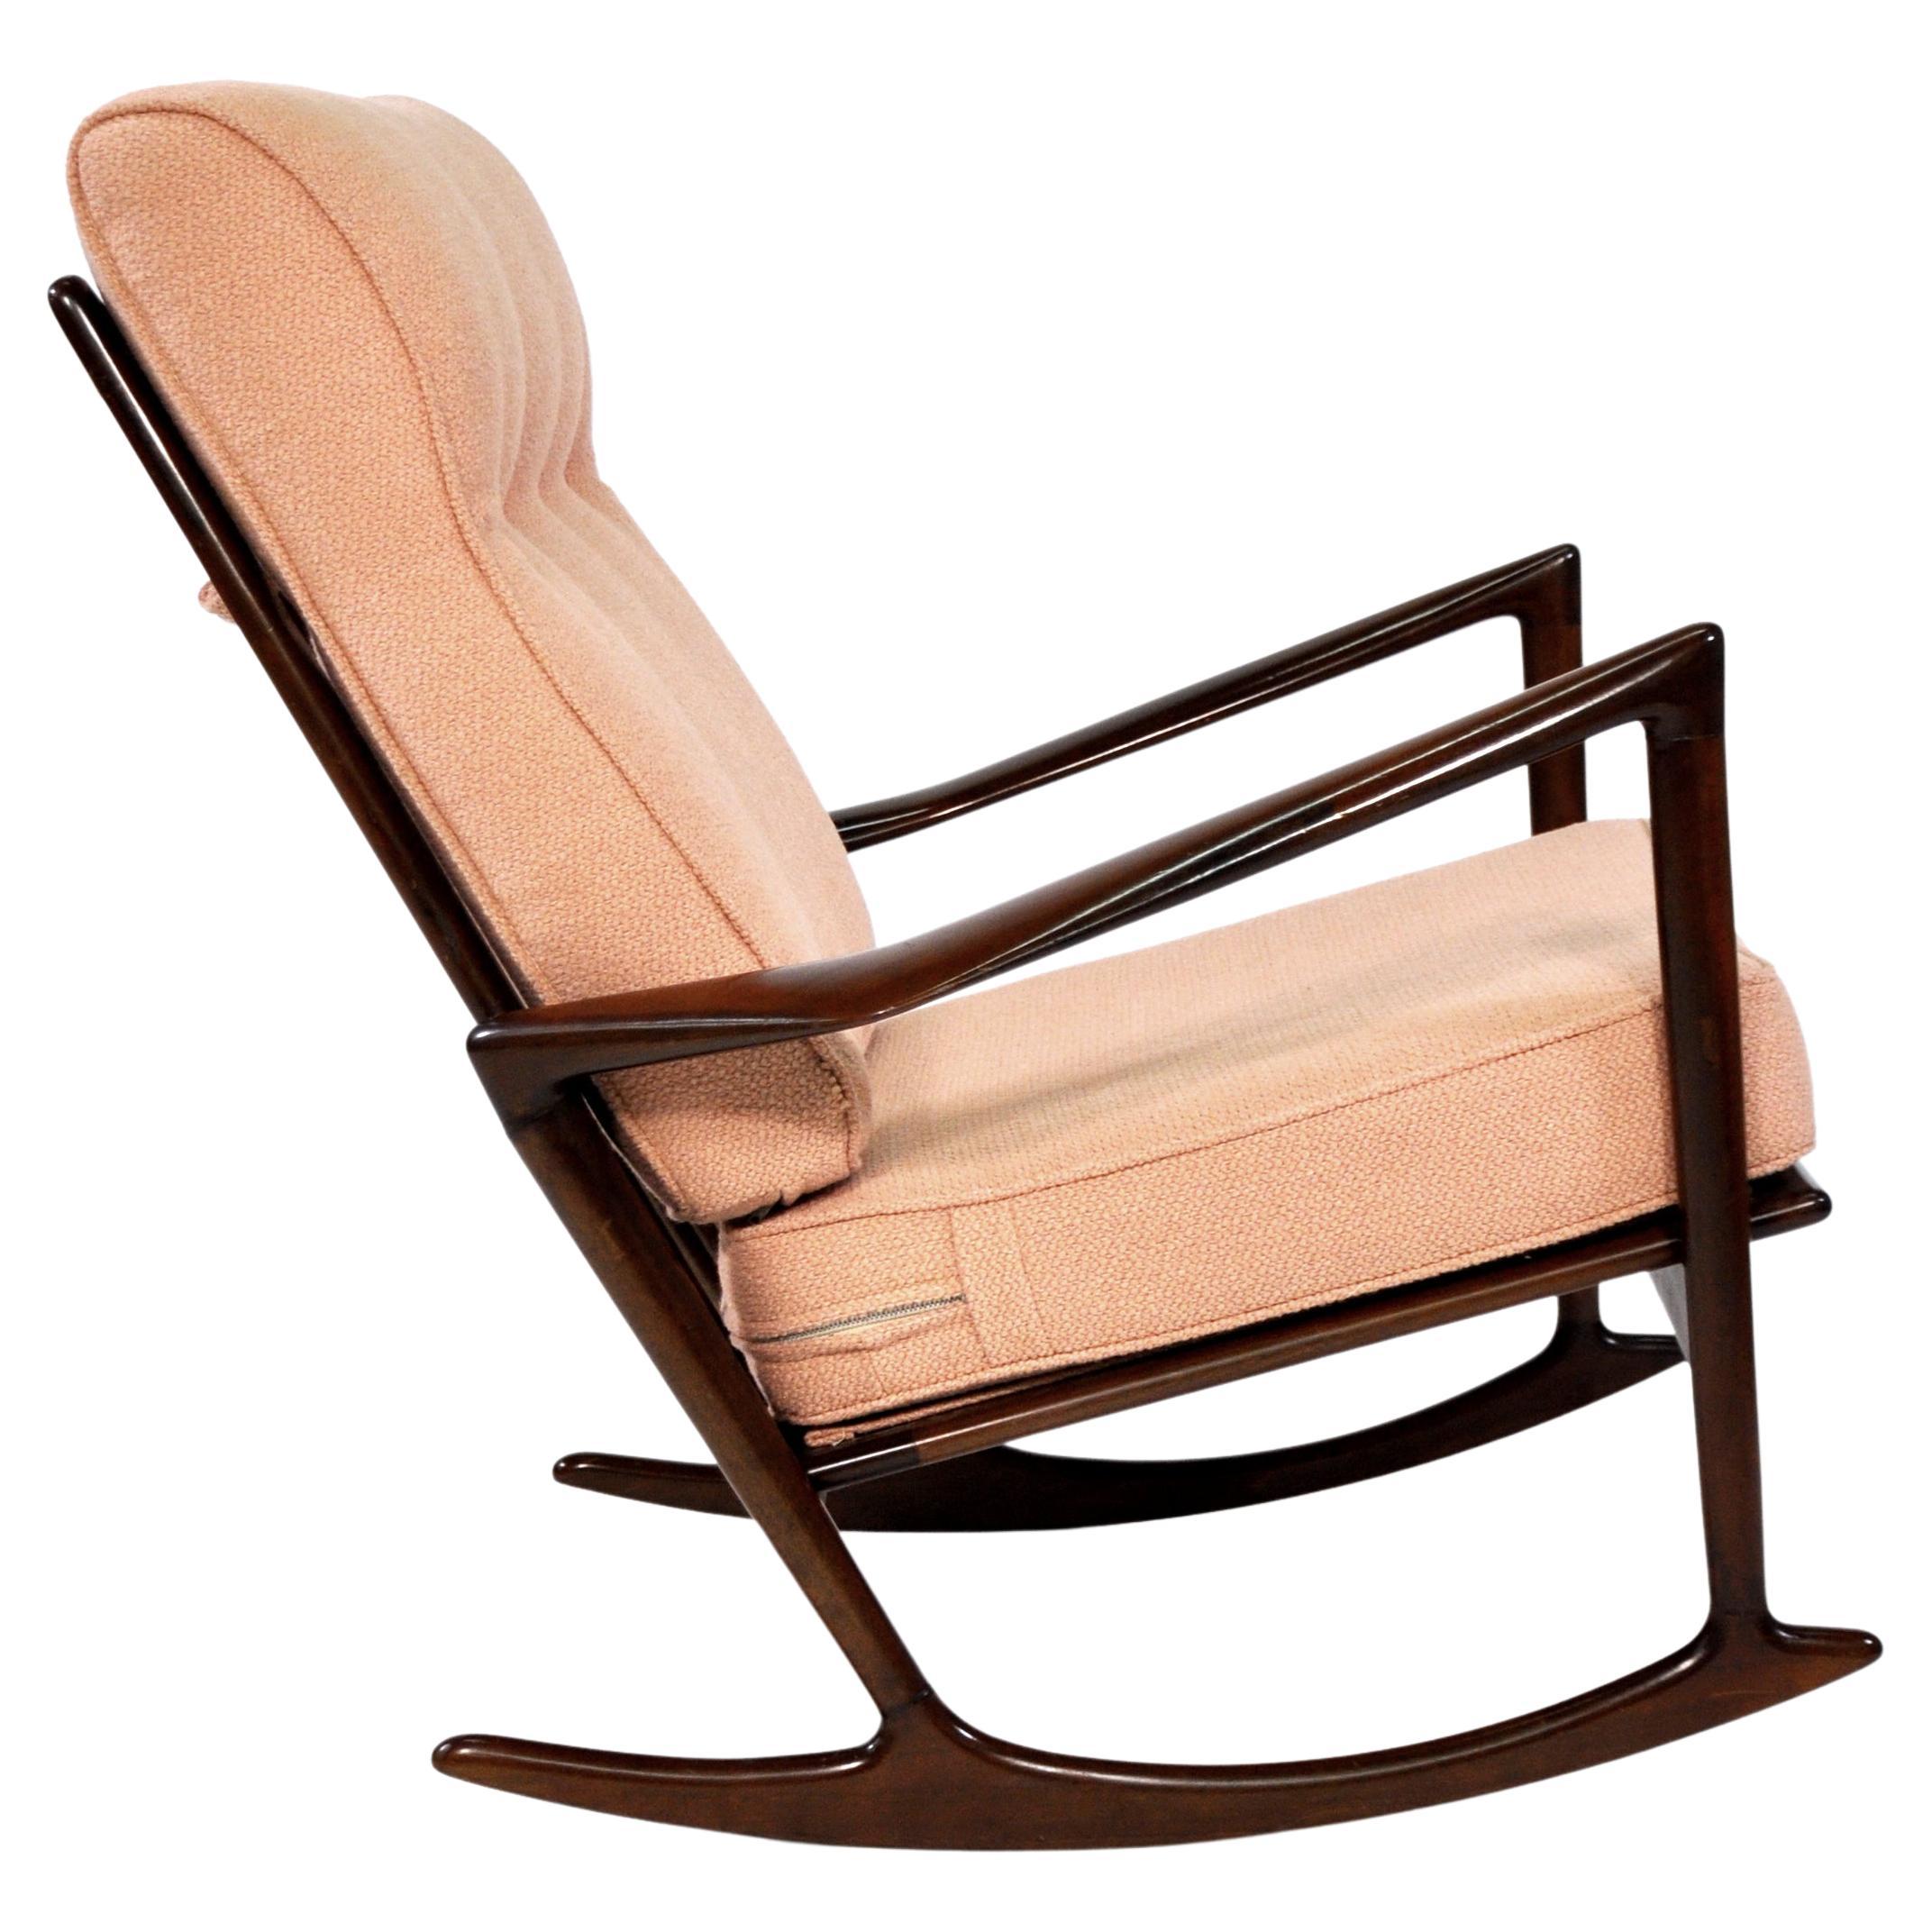 Ib Kofod-Larsen Sculptural Rocking Chair for Selig, Denmark, 1960s For Sale 1